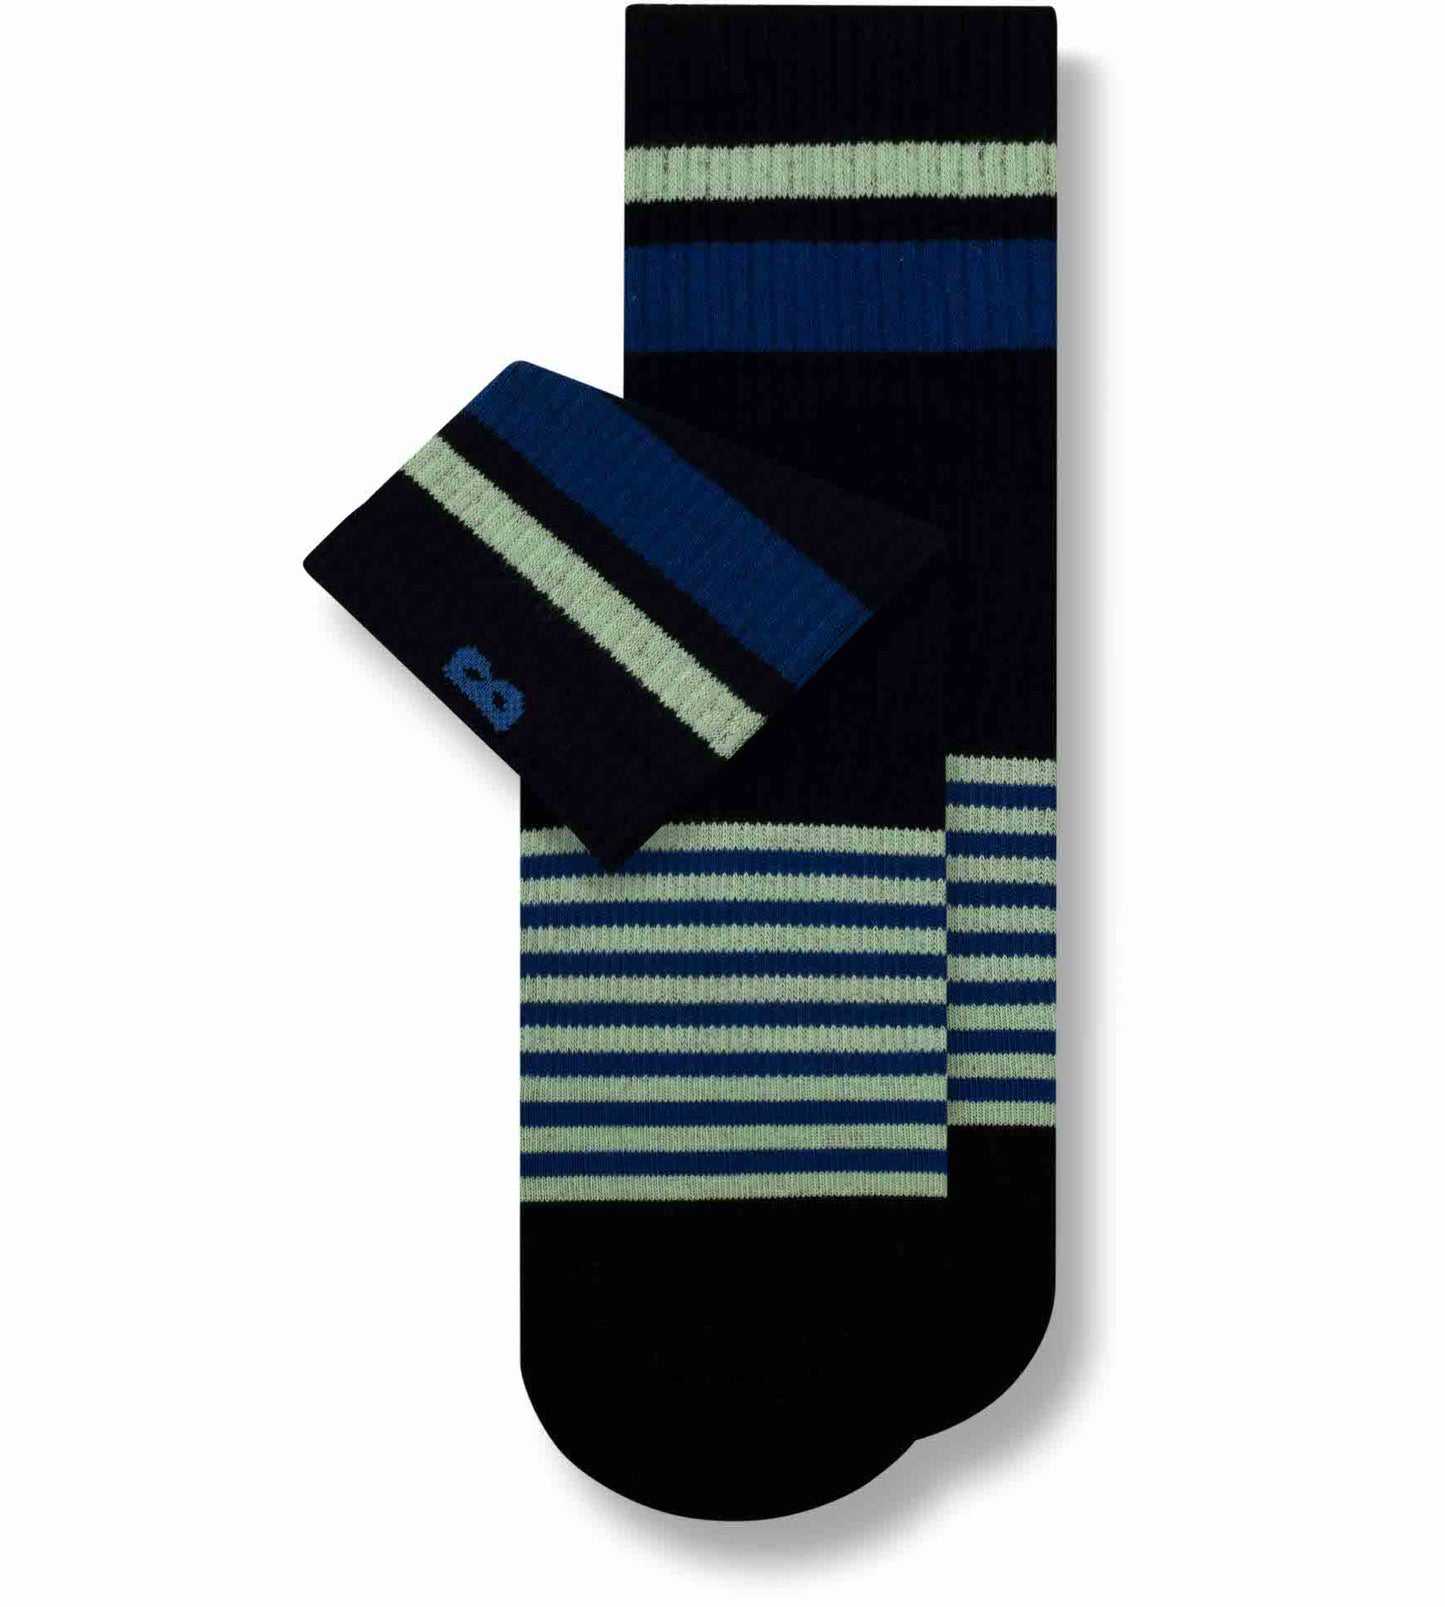 Cushion Ankle Socks 3 Pack colors contain: Dark slate gray, Snow, Dark sea green, Black, Dim gray, Silver, Midnight blue, Gains boro, Gray, Dark Gray